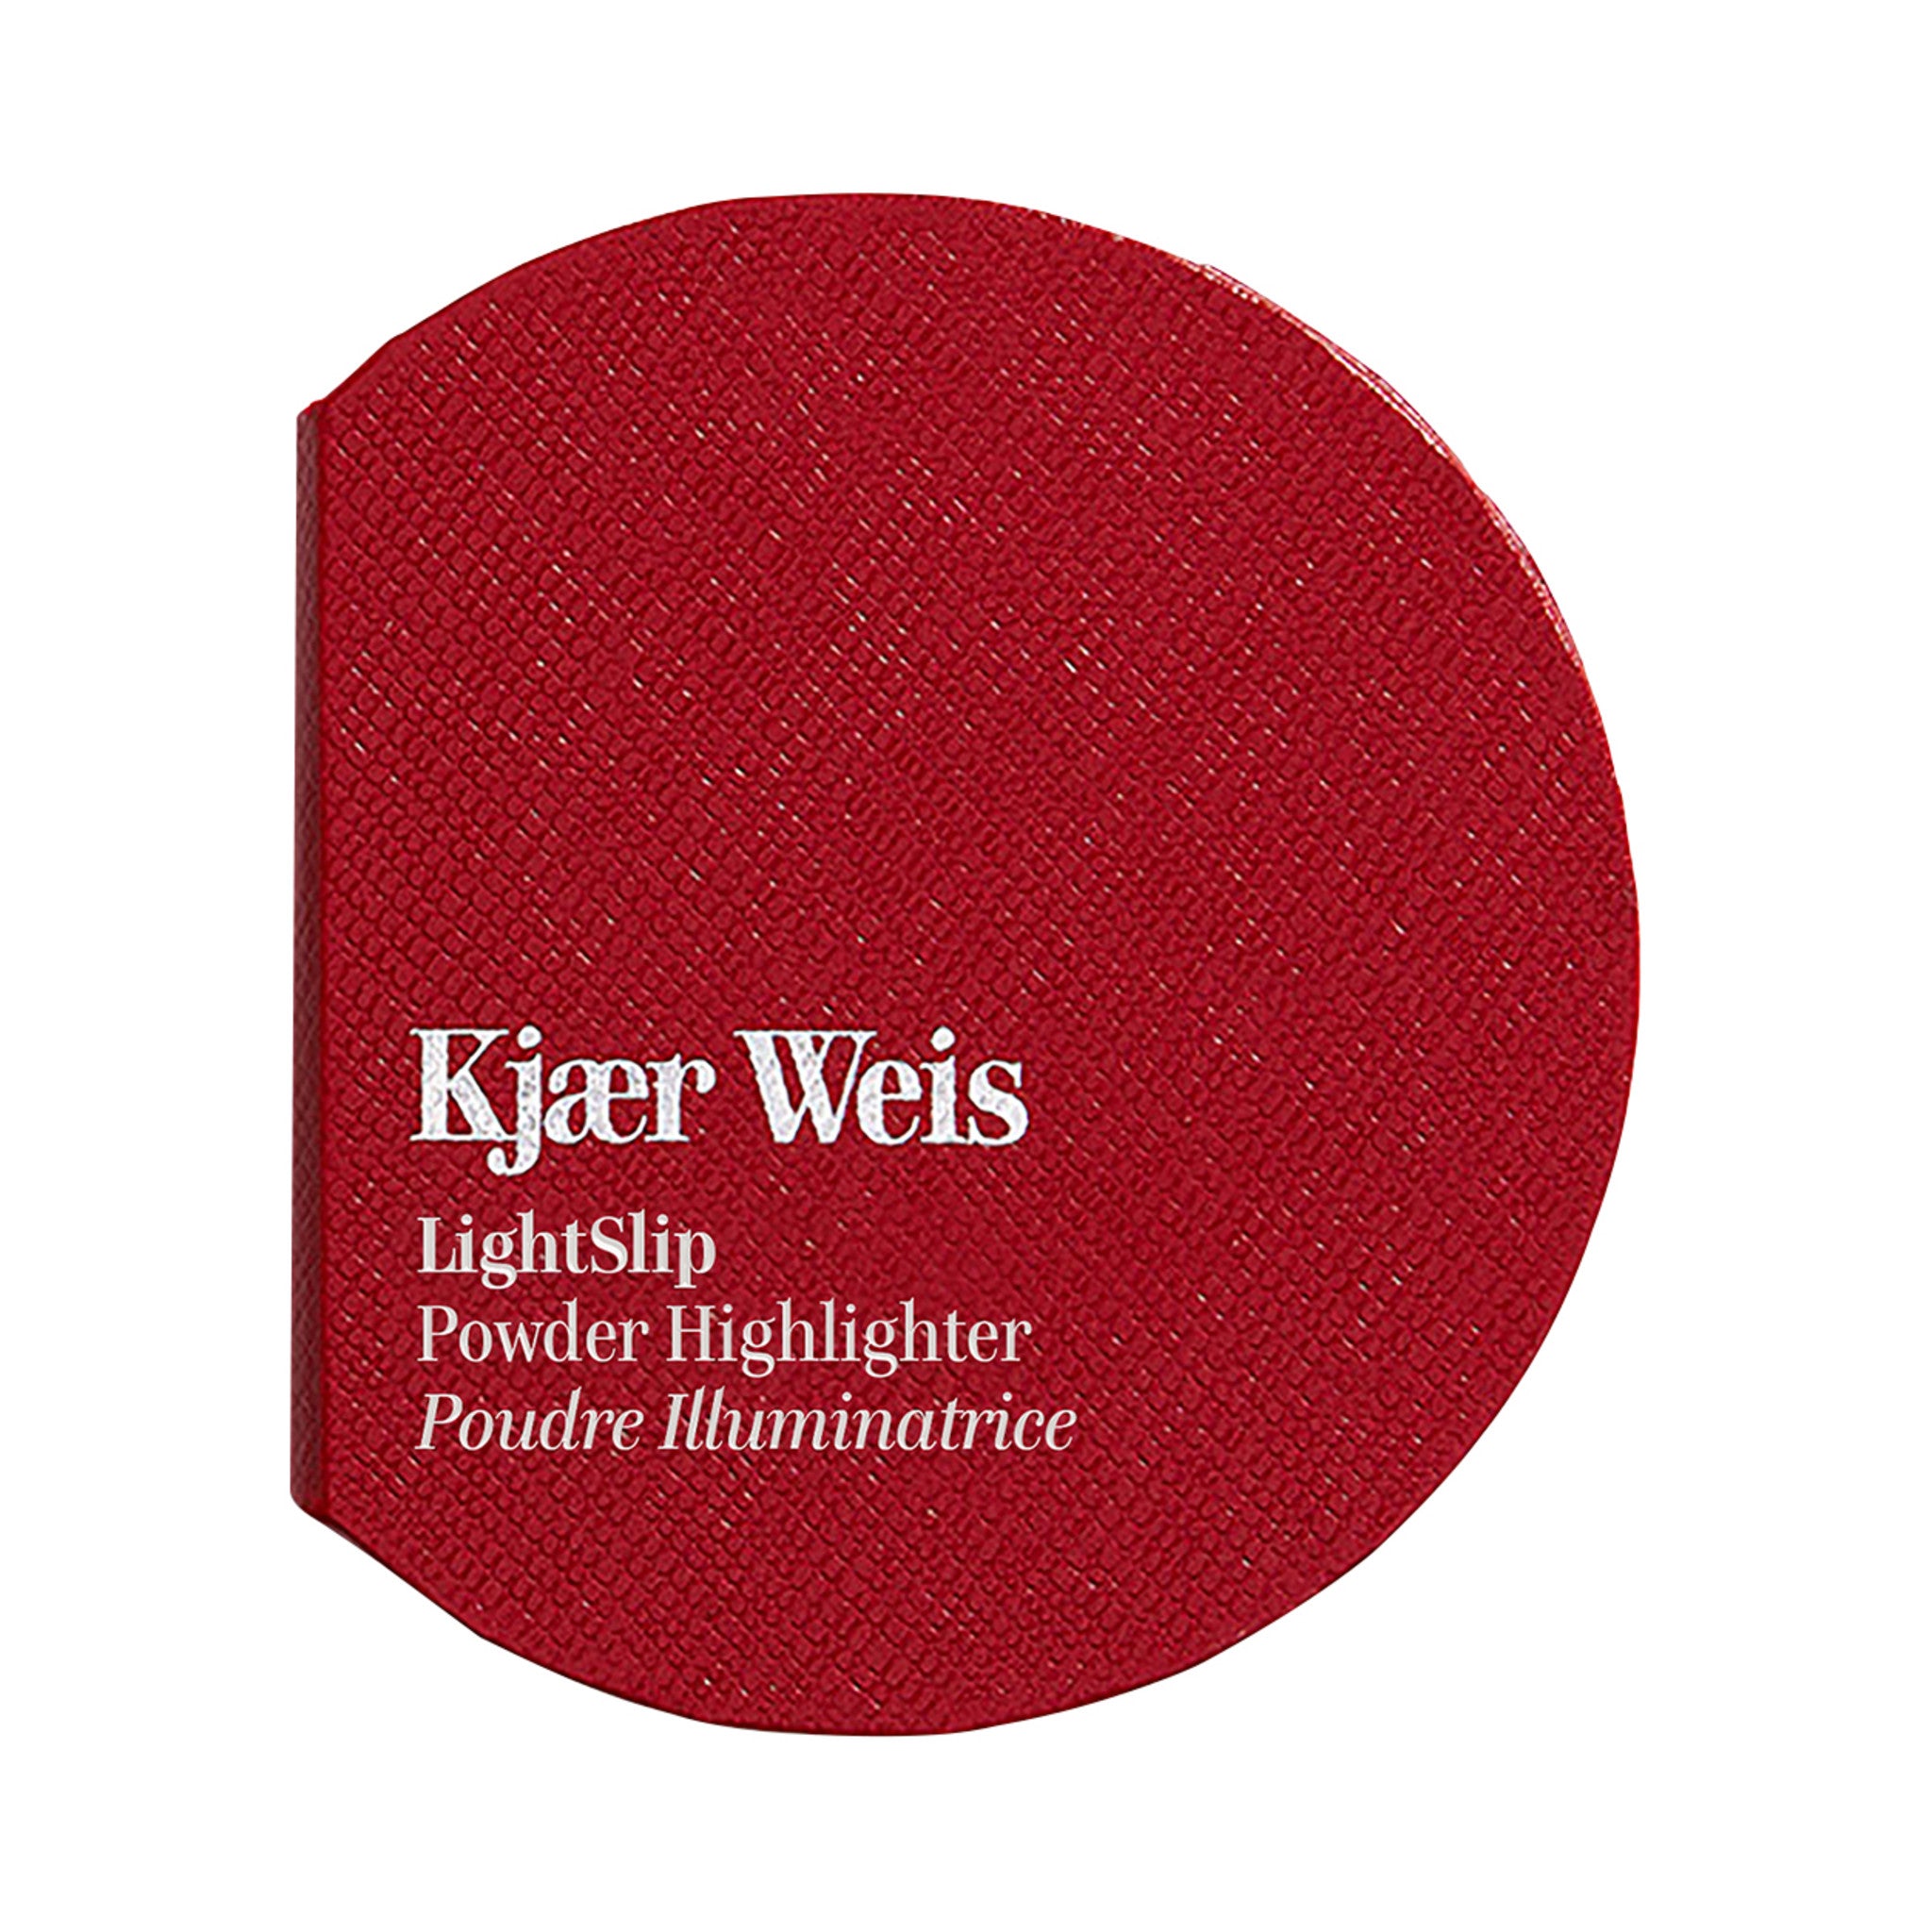 Kjaer Weis Red Edition Powder Highlighter Case main image.